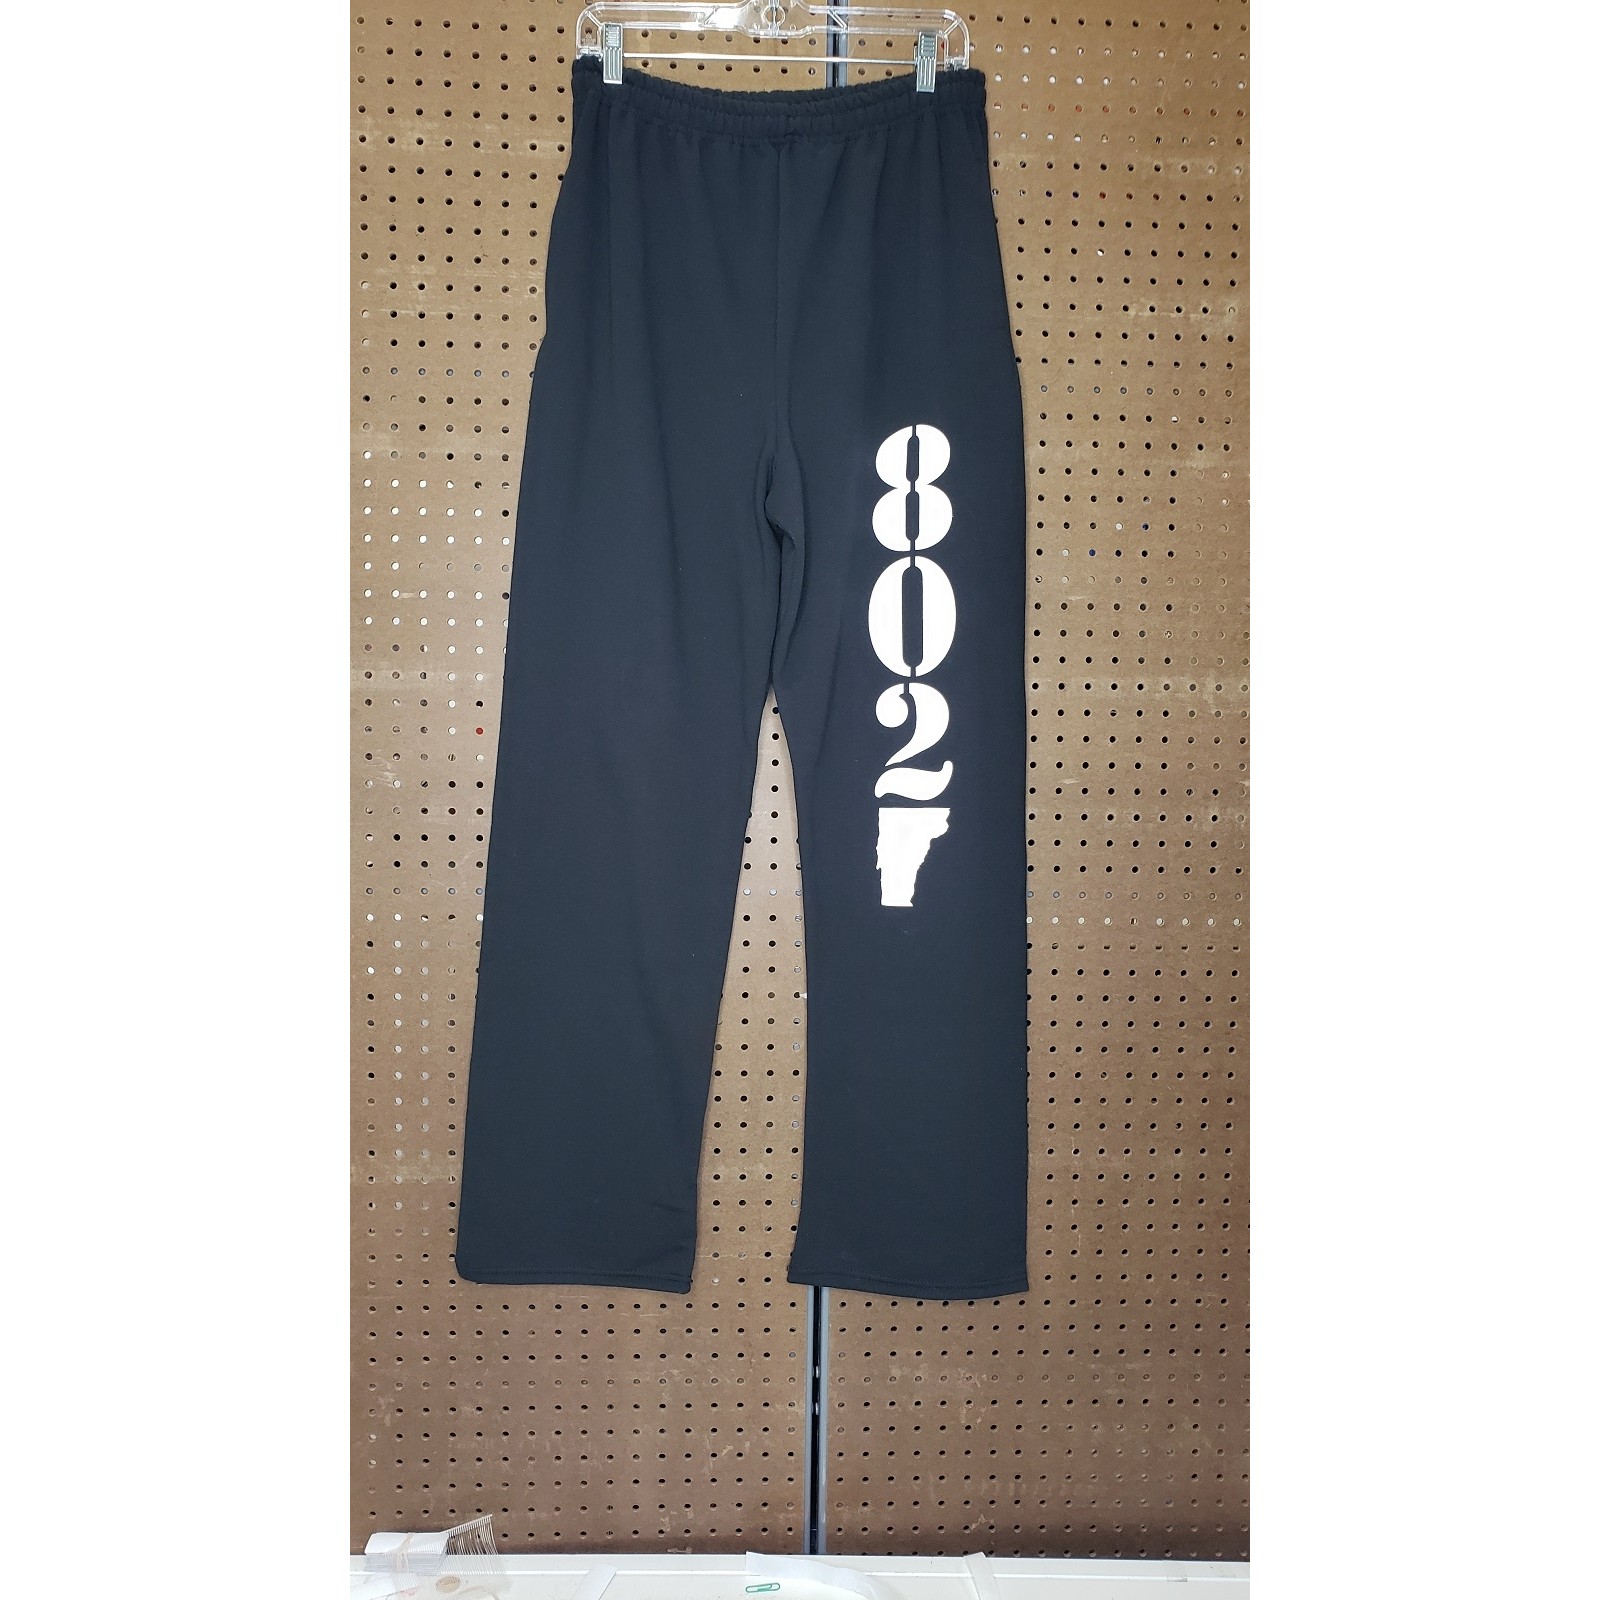 802 Classic 8oz Sweatpants (Black/White)